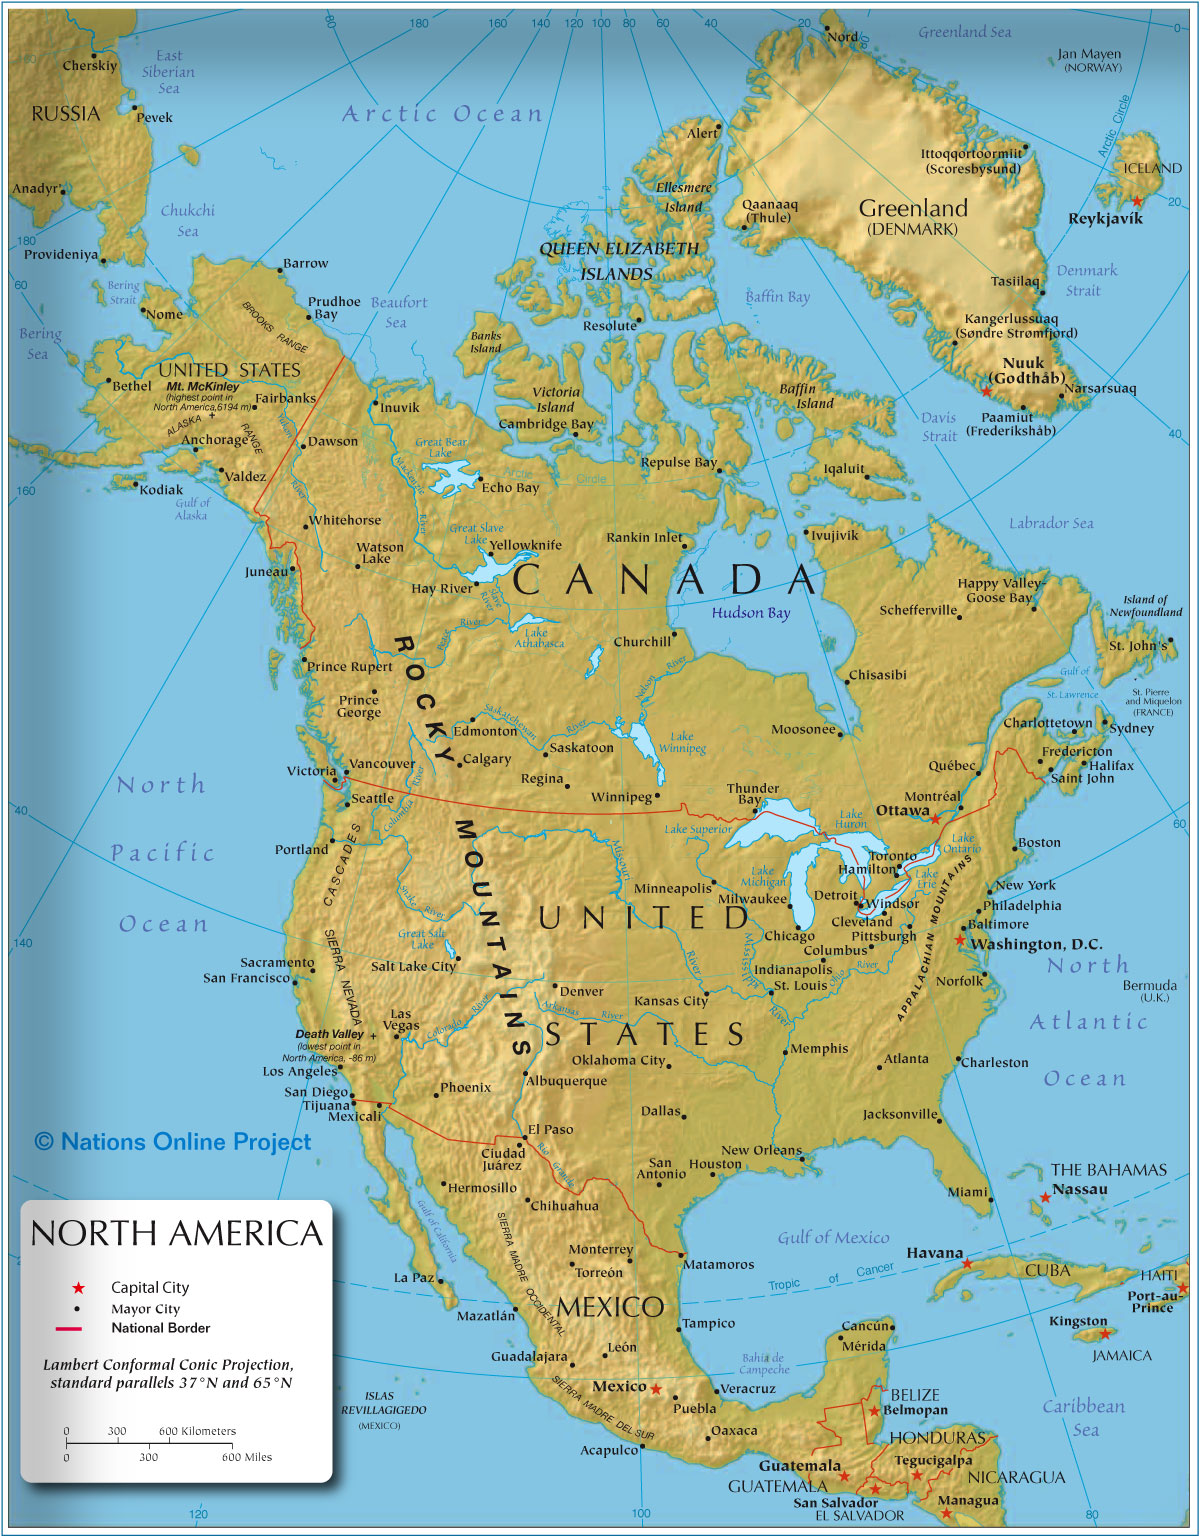 http://www.nationsonline.org/maps/north_america_map_1200.jpg